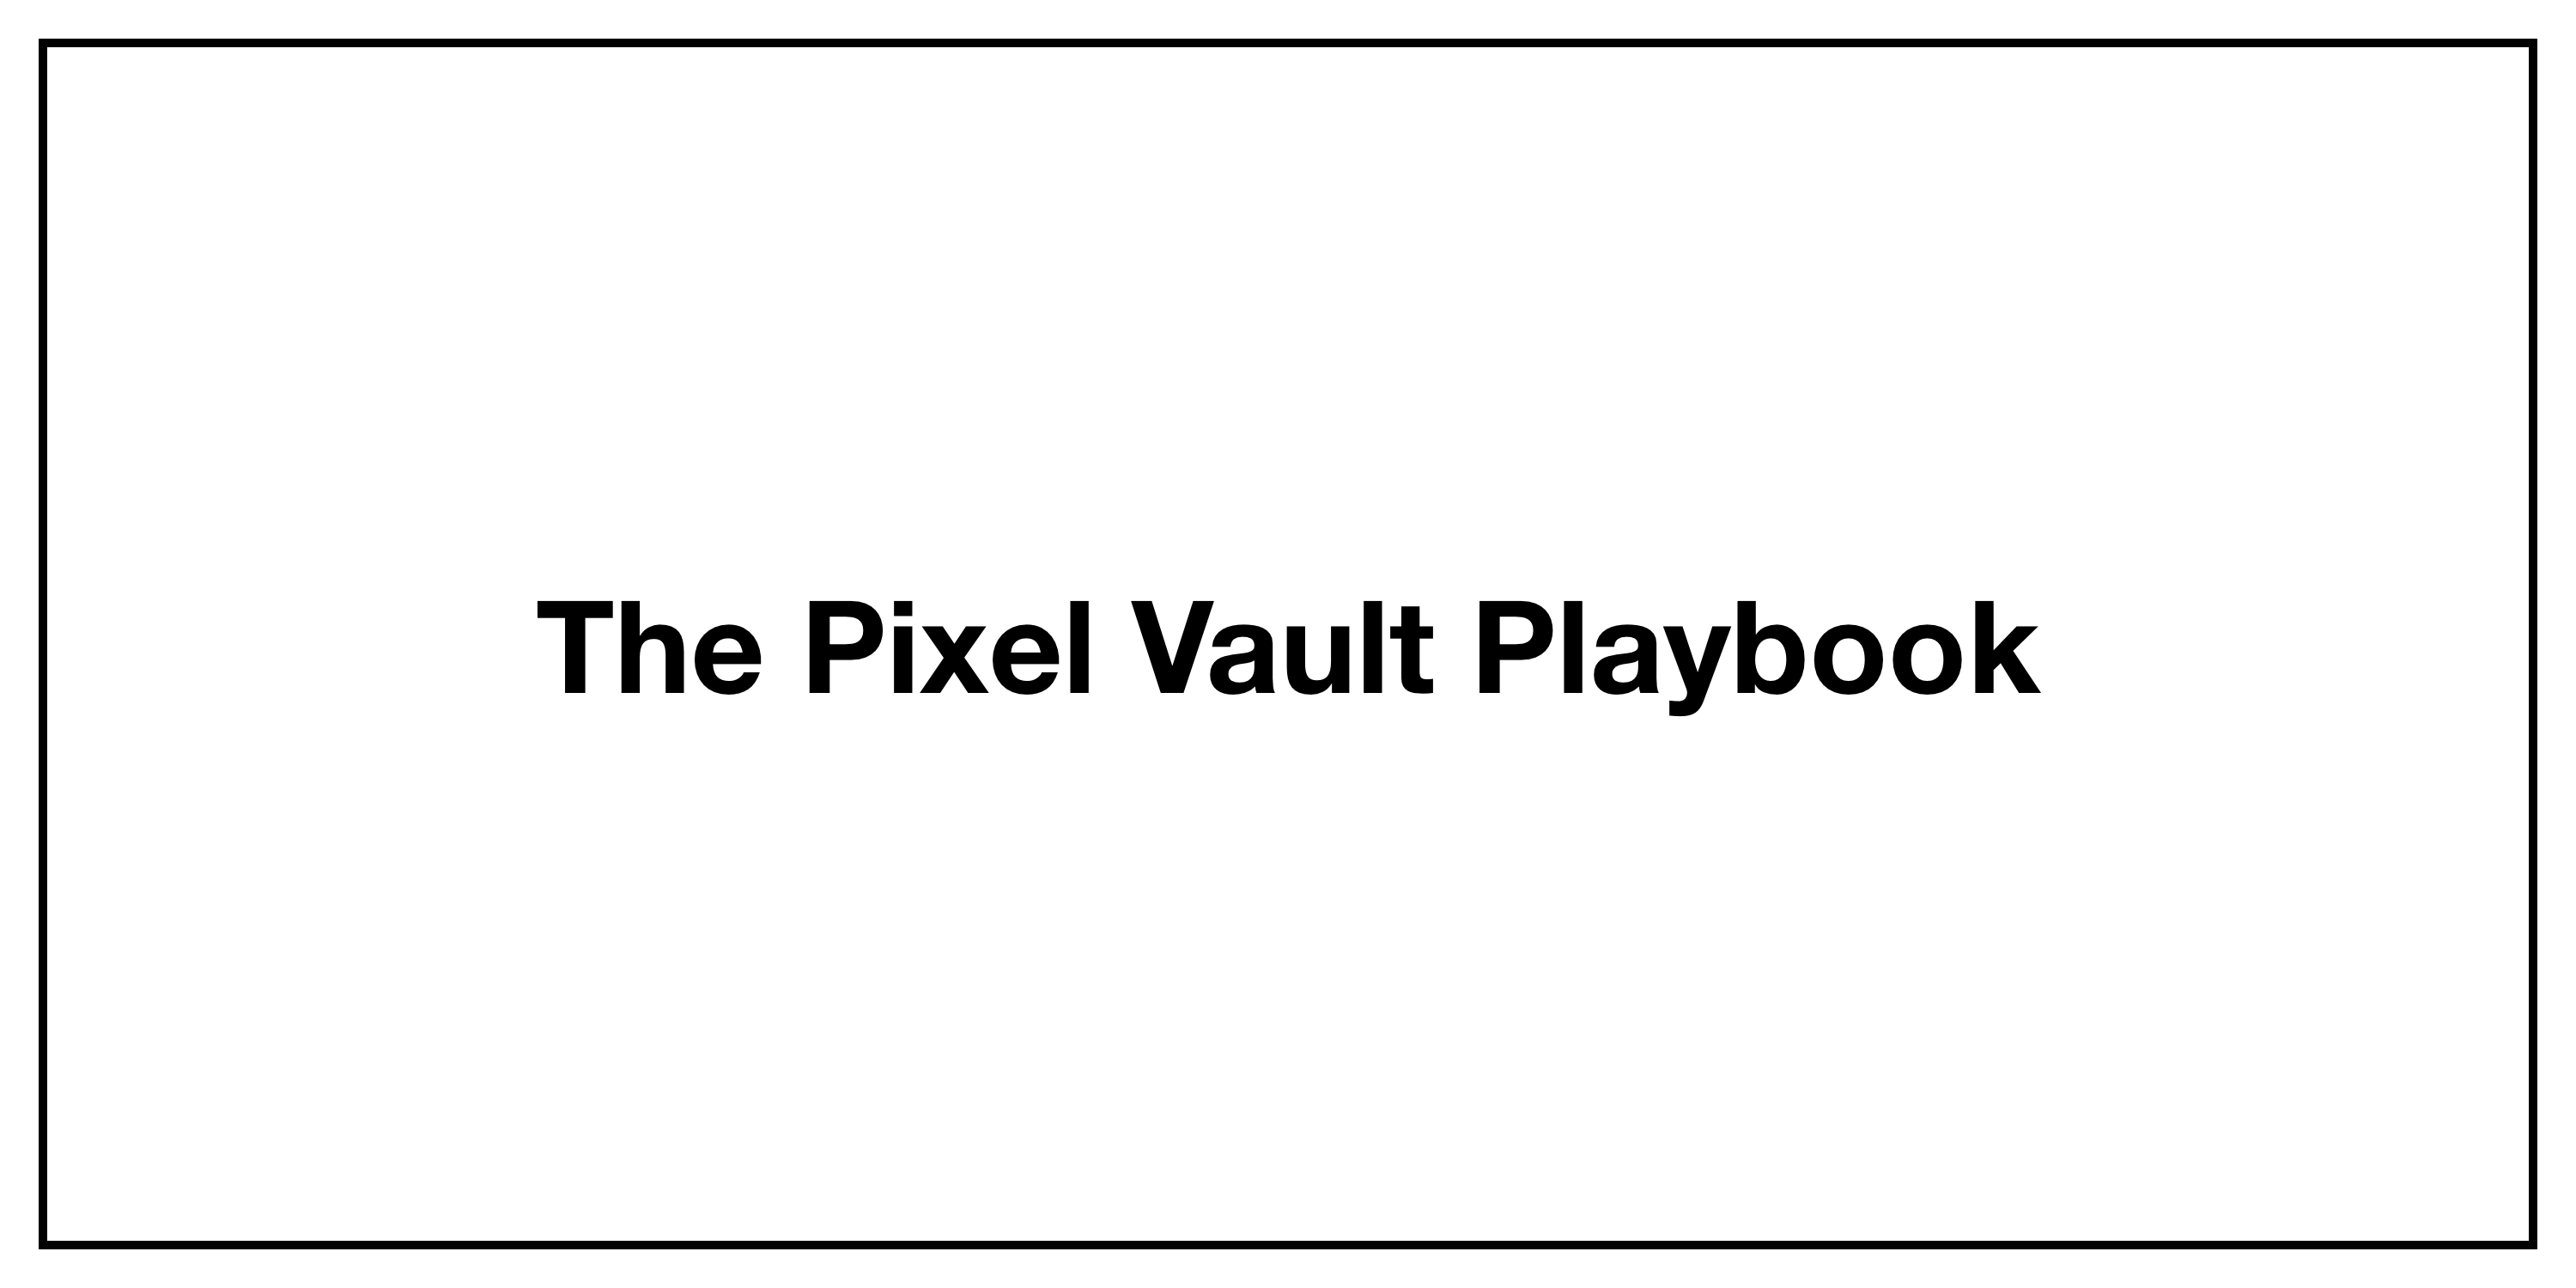 Making sense of Pixel Vault - by Denny